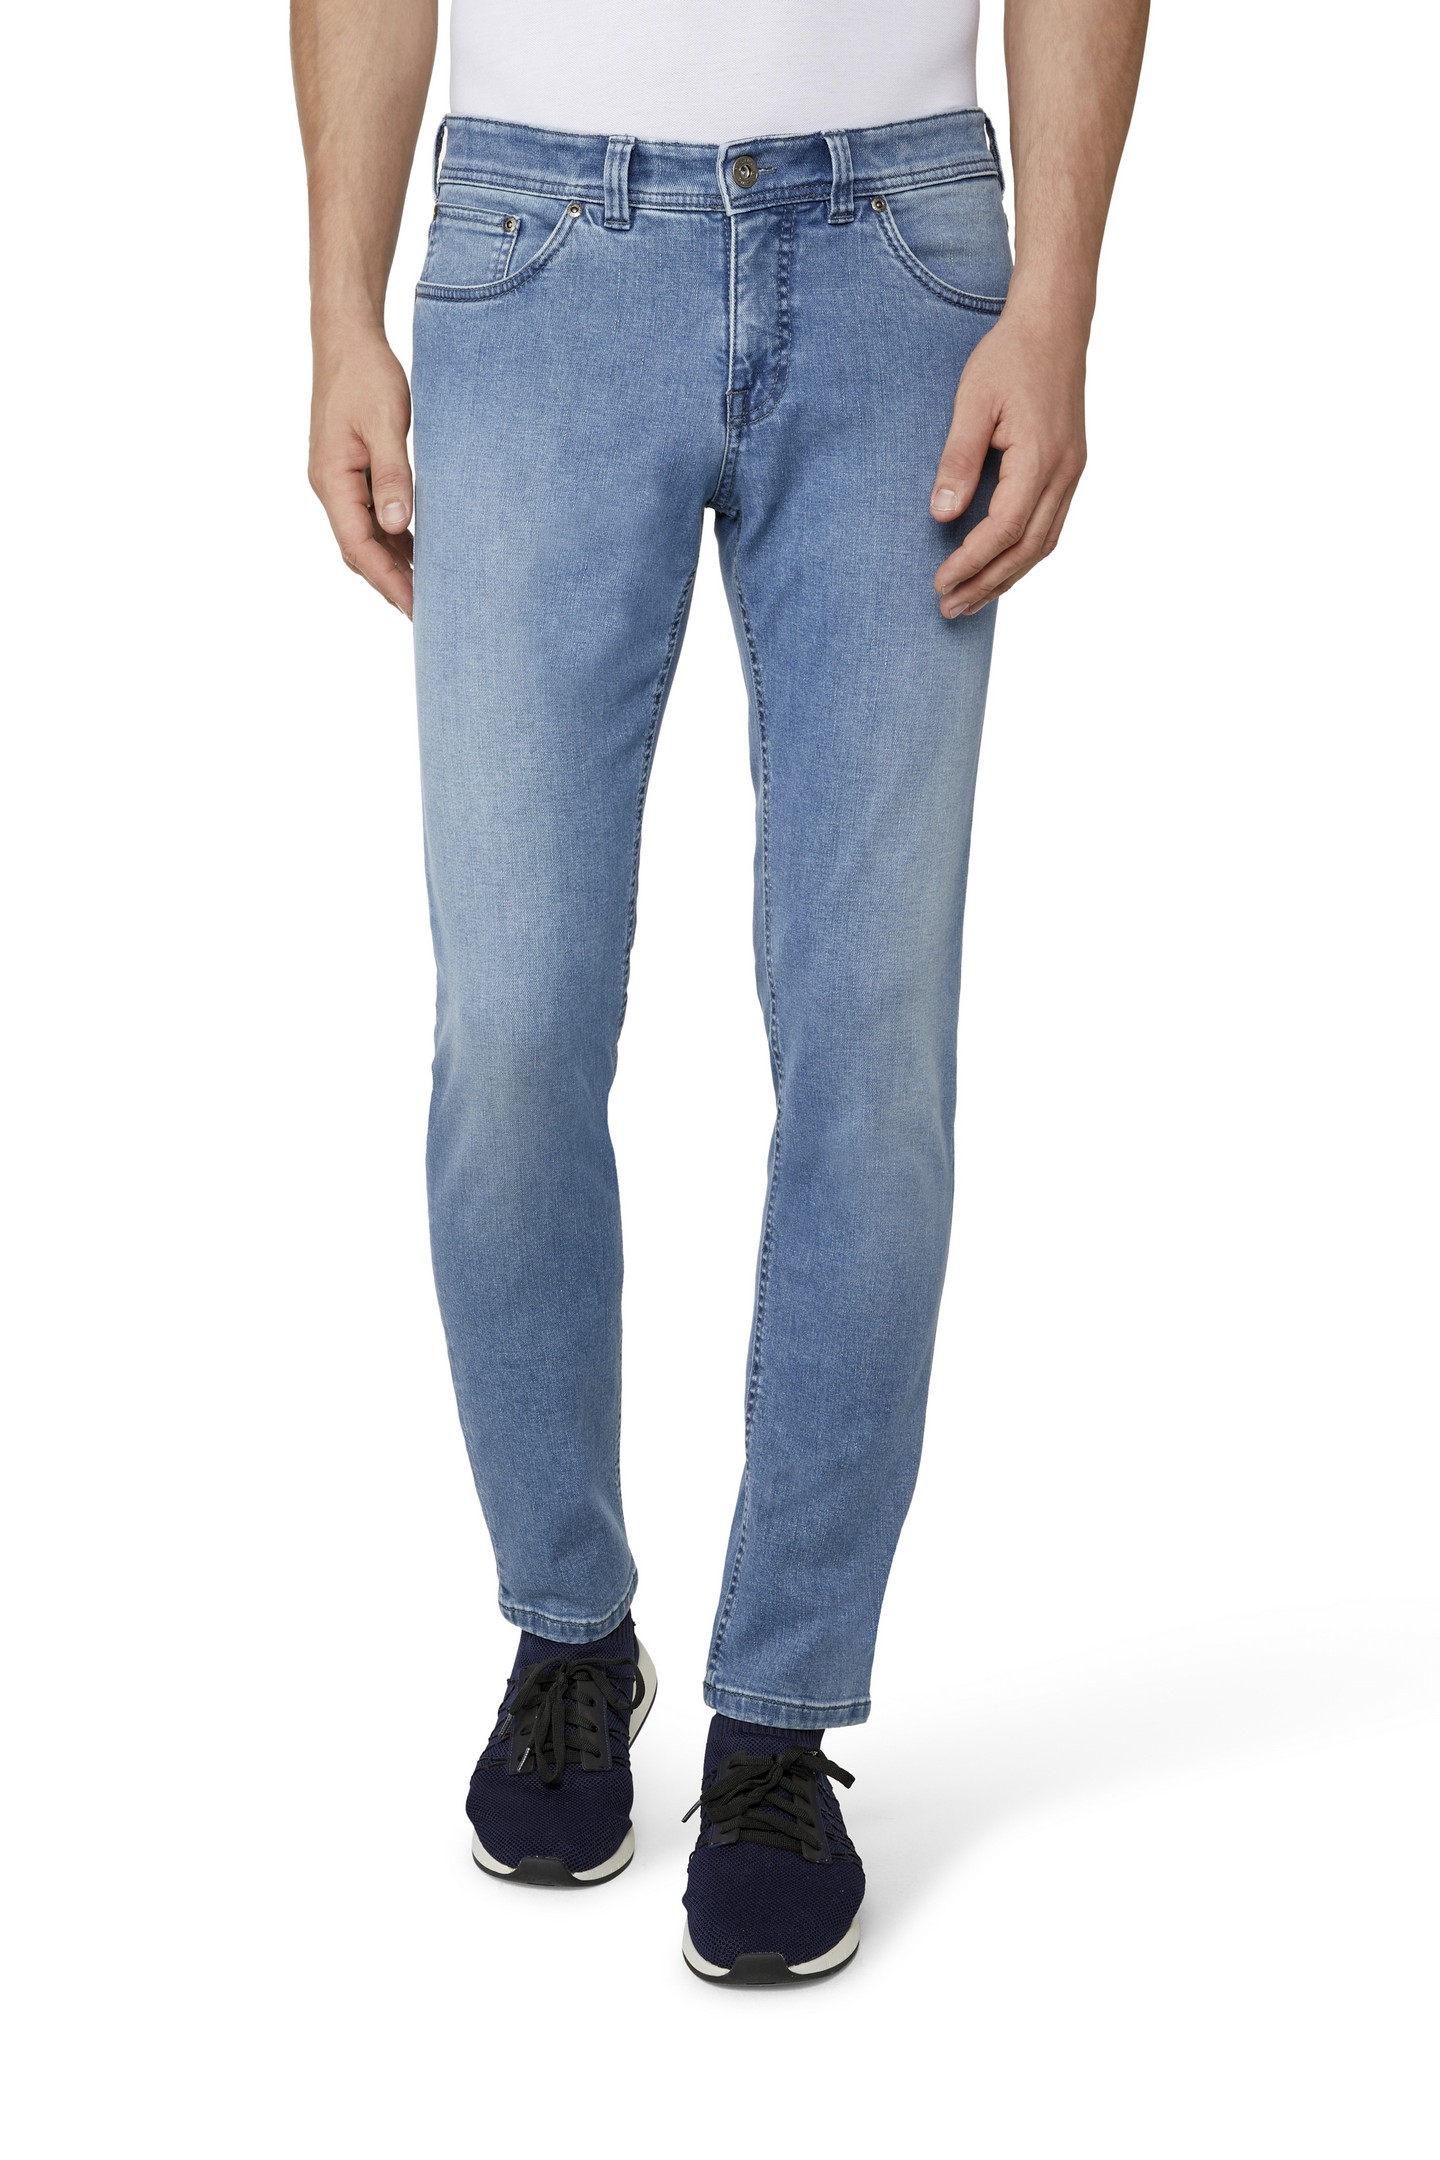 Gardeur Sandro Slim-Fit Jeans Light Blue | Jan Rozing Men's Fashion